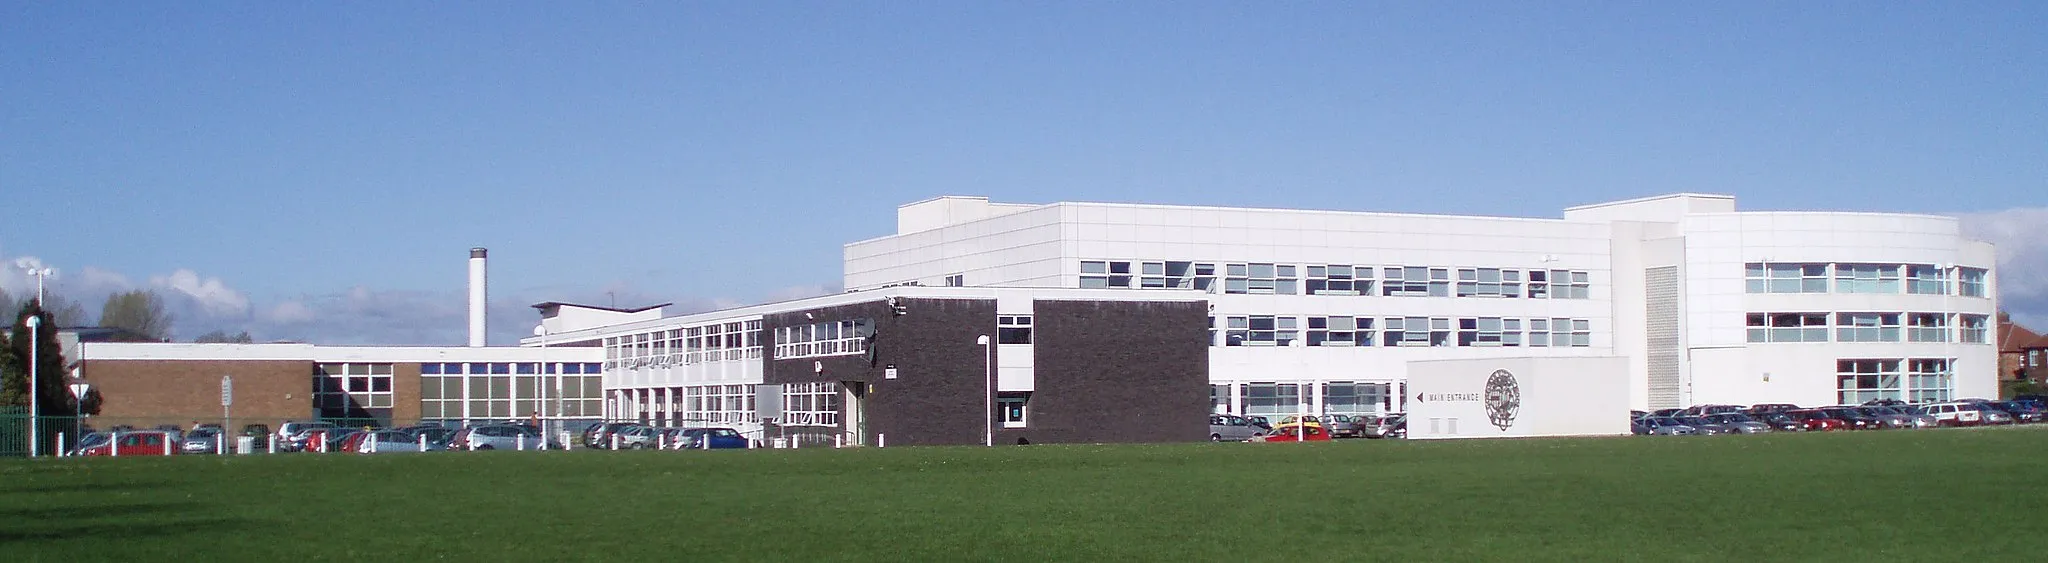 Photo showing: A Photograph of Gosforth High School's buildings. Gosforth High School, Newcastle Upon Tyne, England, UK